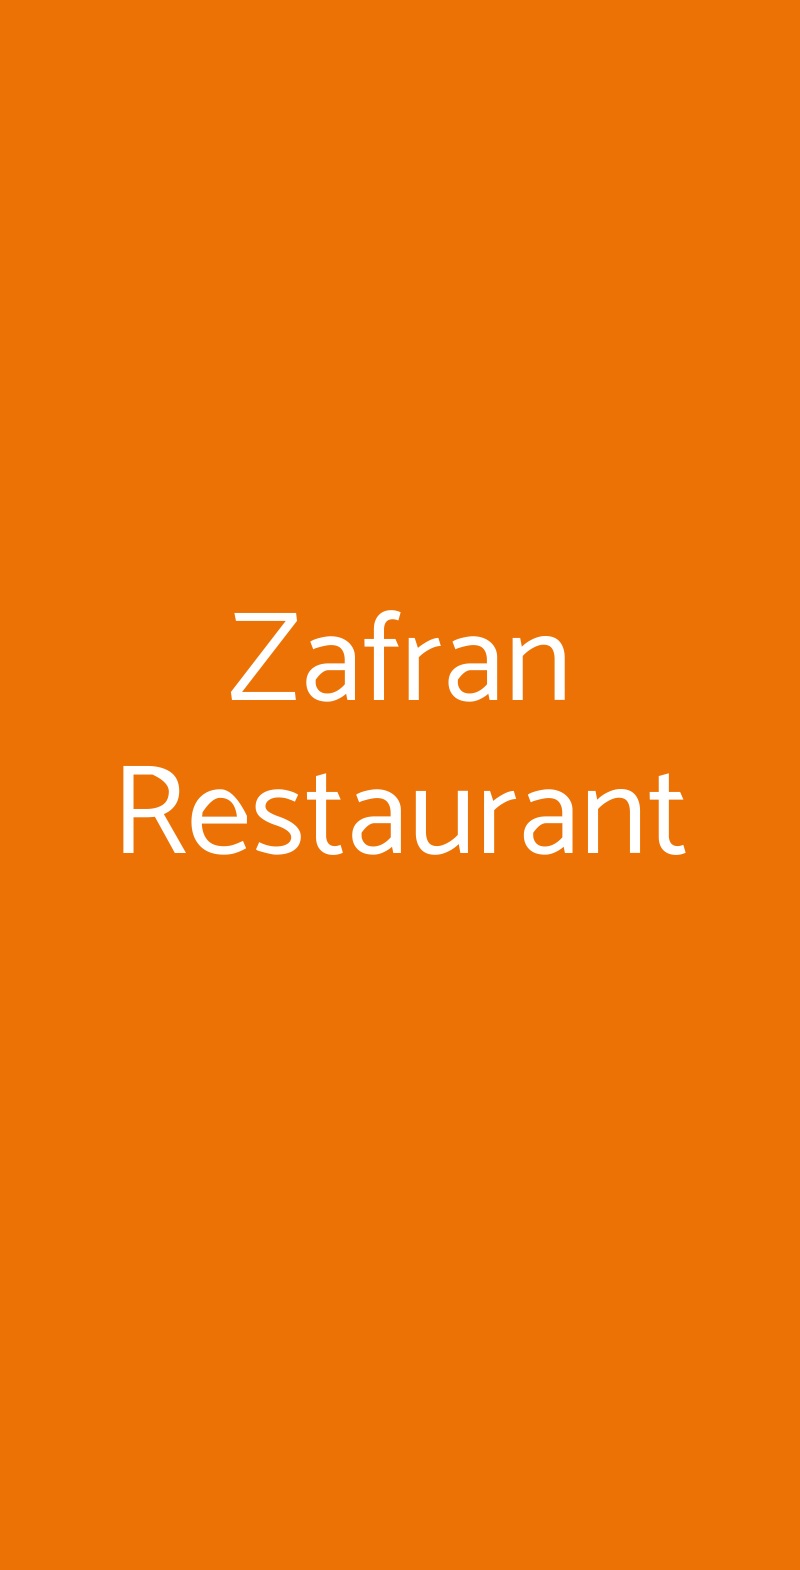 Zafran Restaurant Donnalucata menù 1 pagina